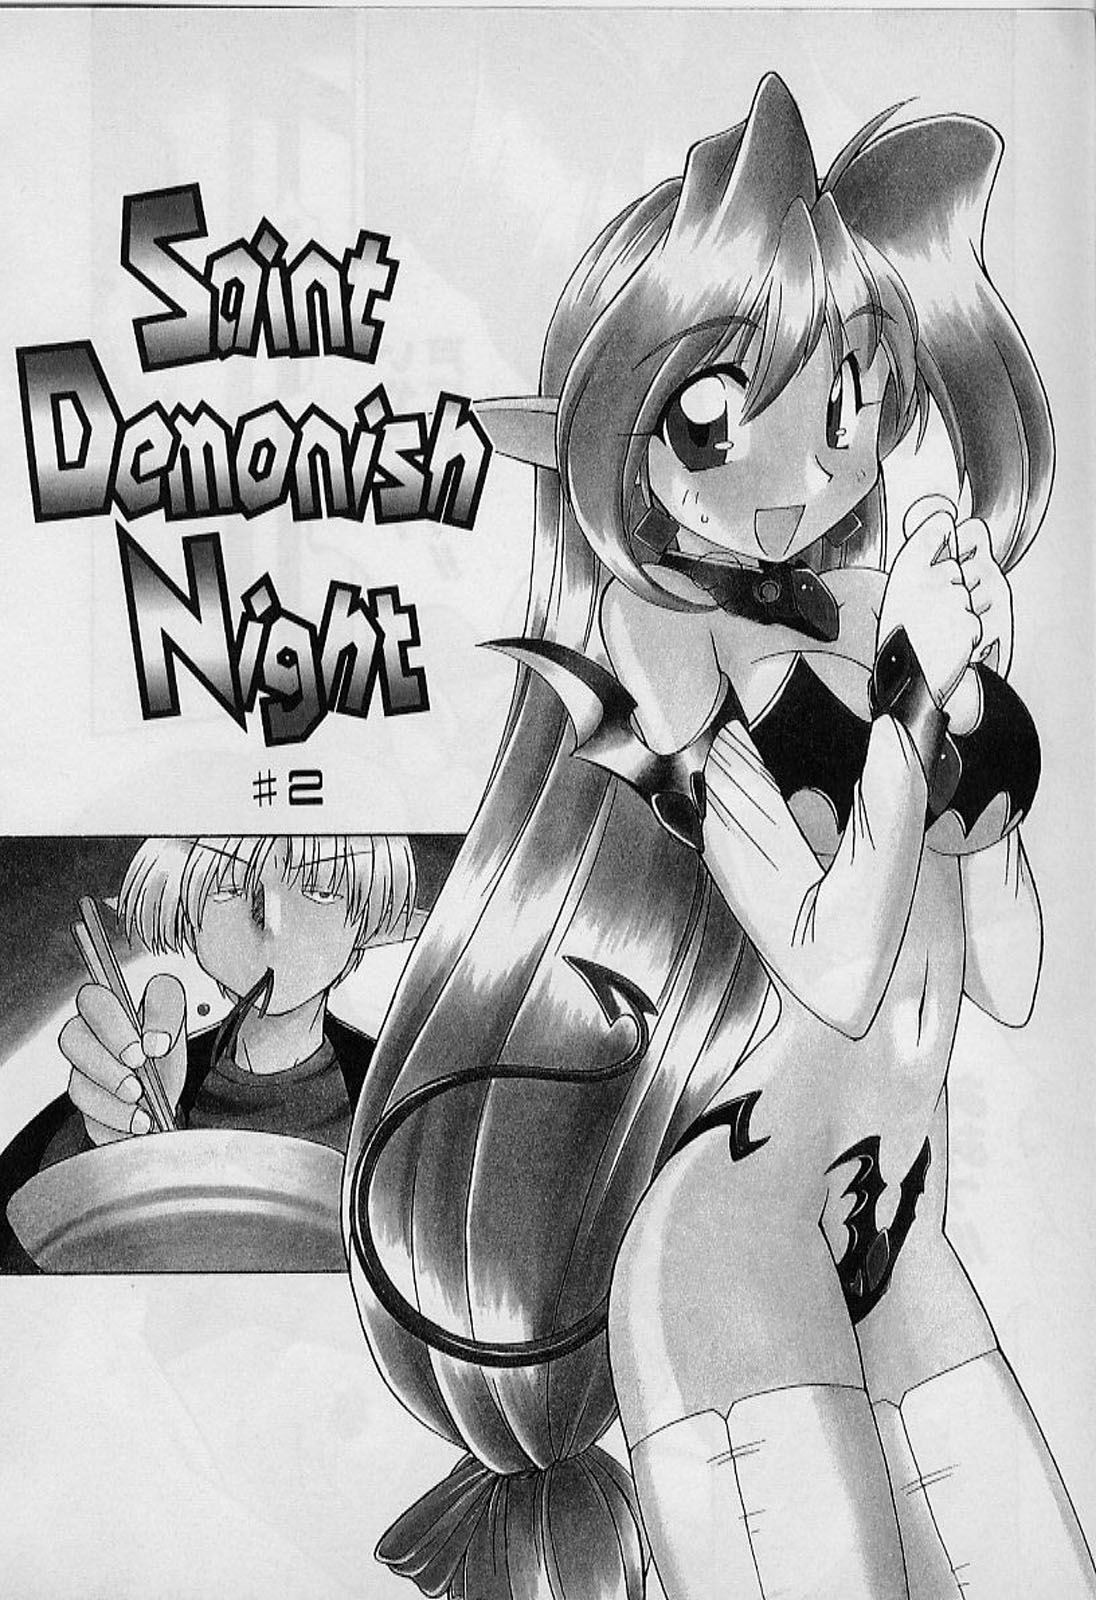 [中島零] Saint Demonish Night